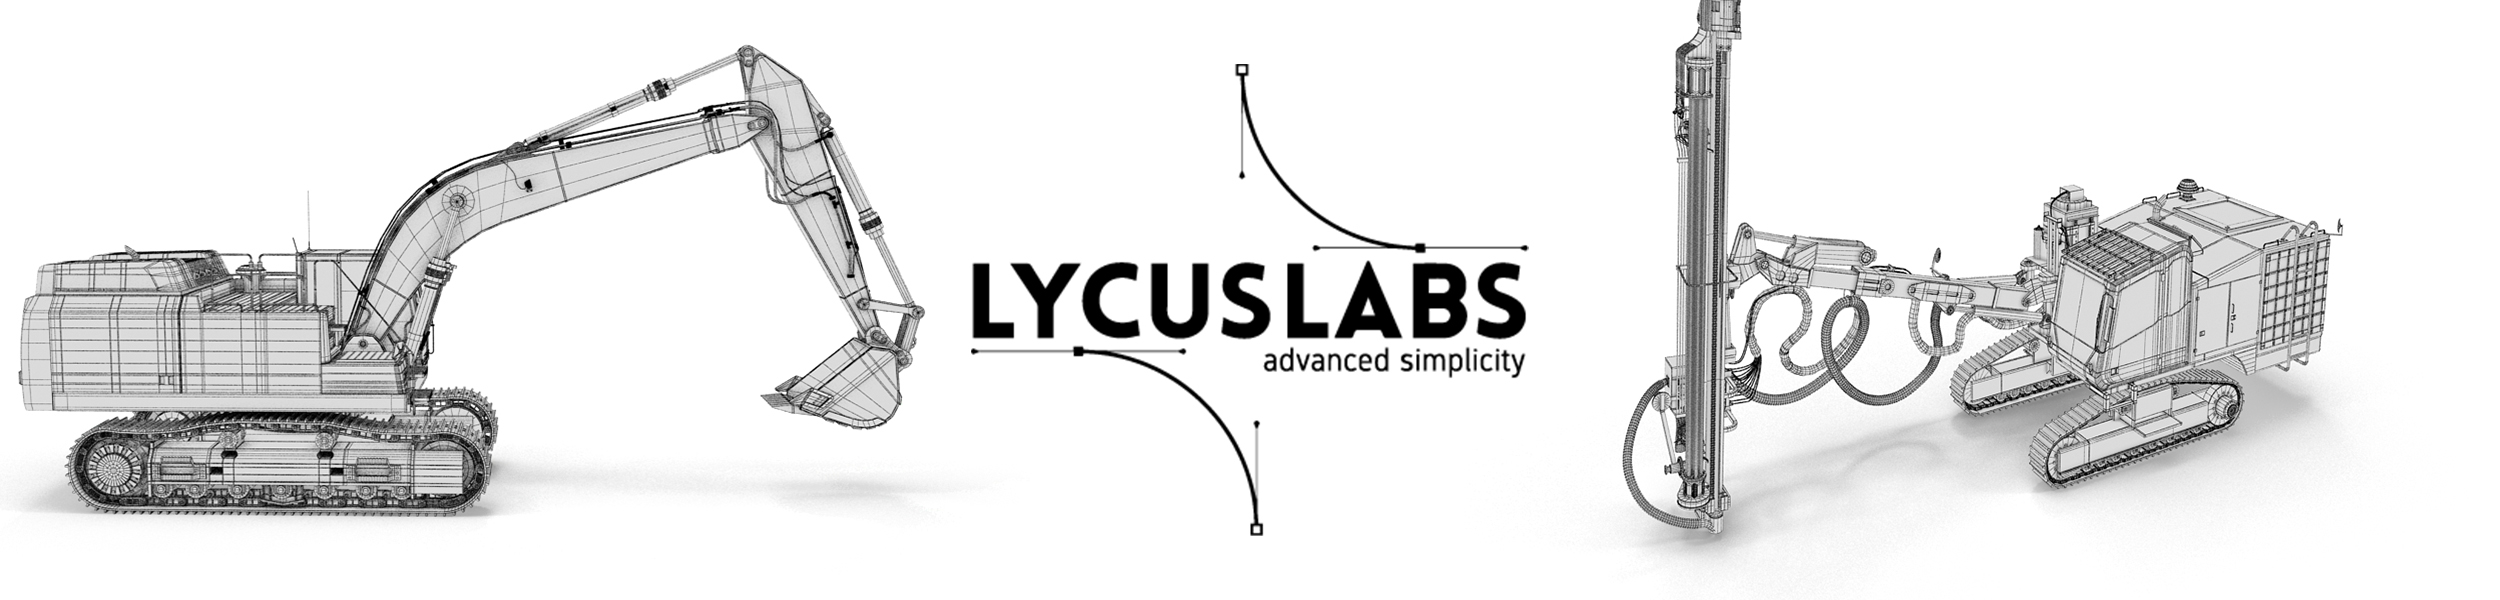 lycuslabs slider1